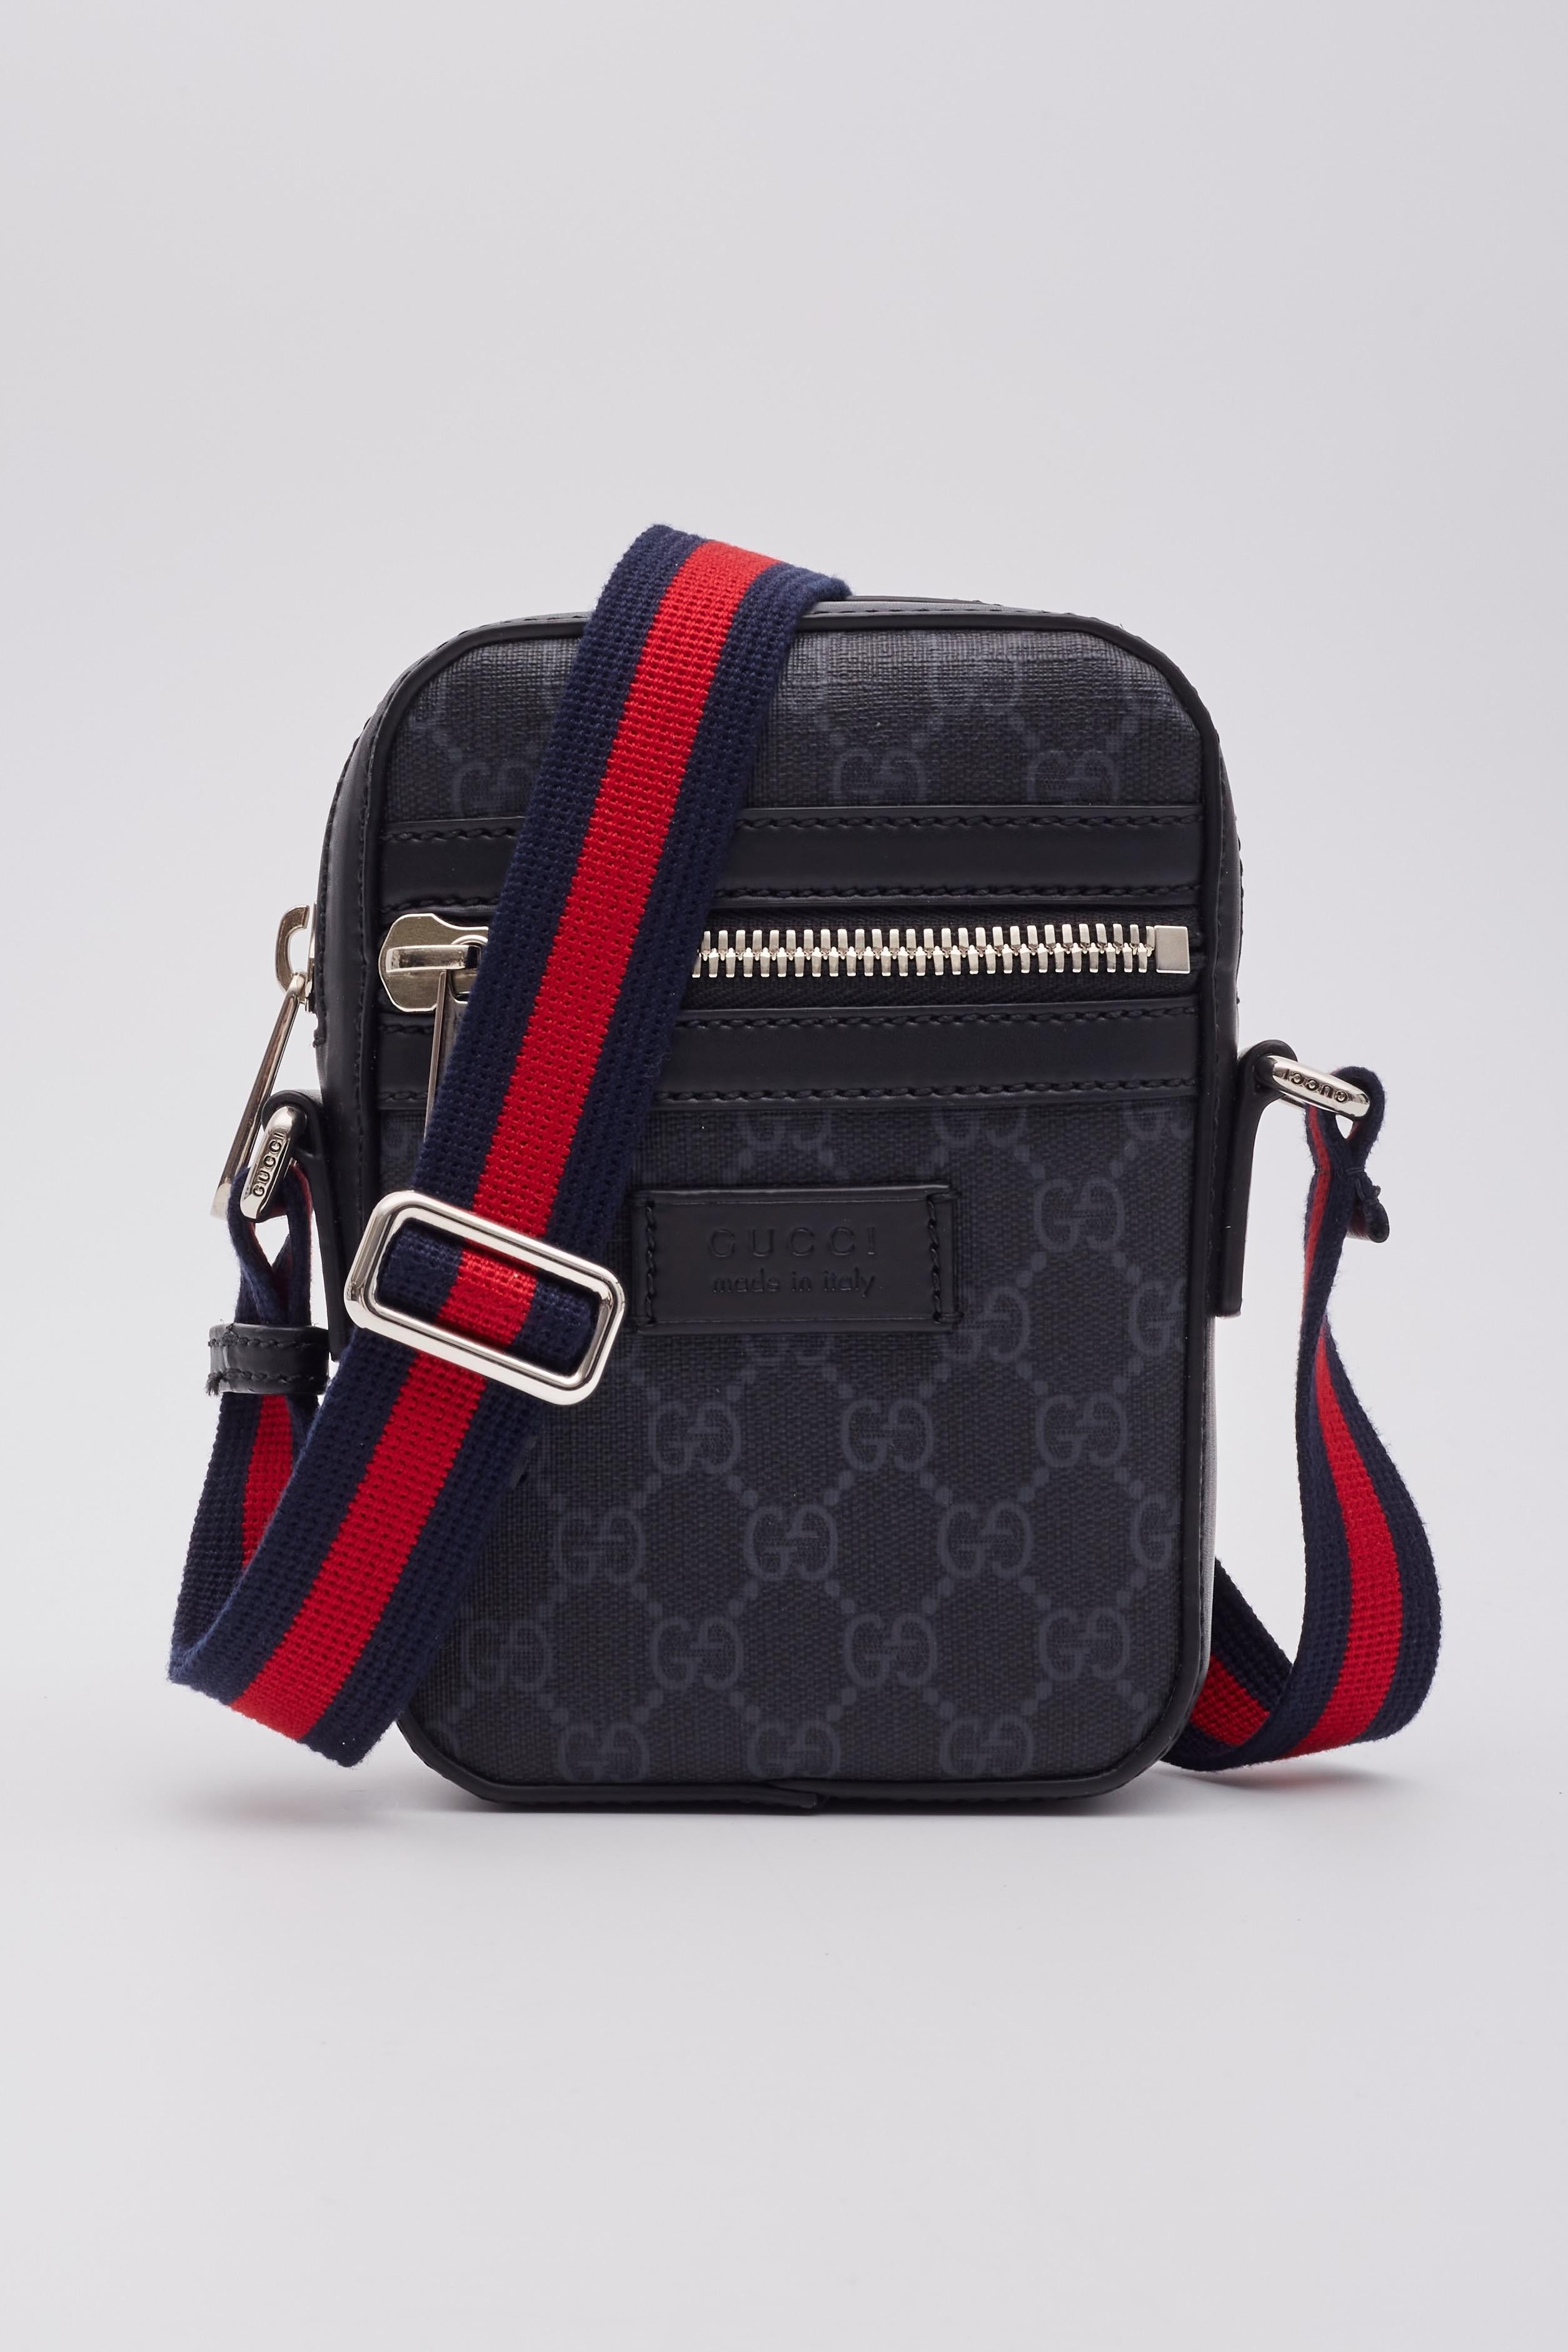 Gucci GG Supreme Monogram Web Messenger Bag Black In Excellent Condition For Sale In Montreal, Quebec